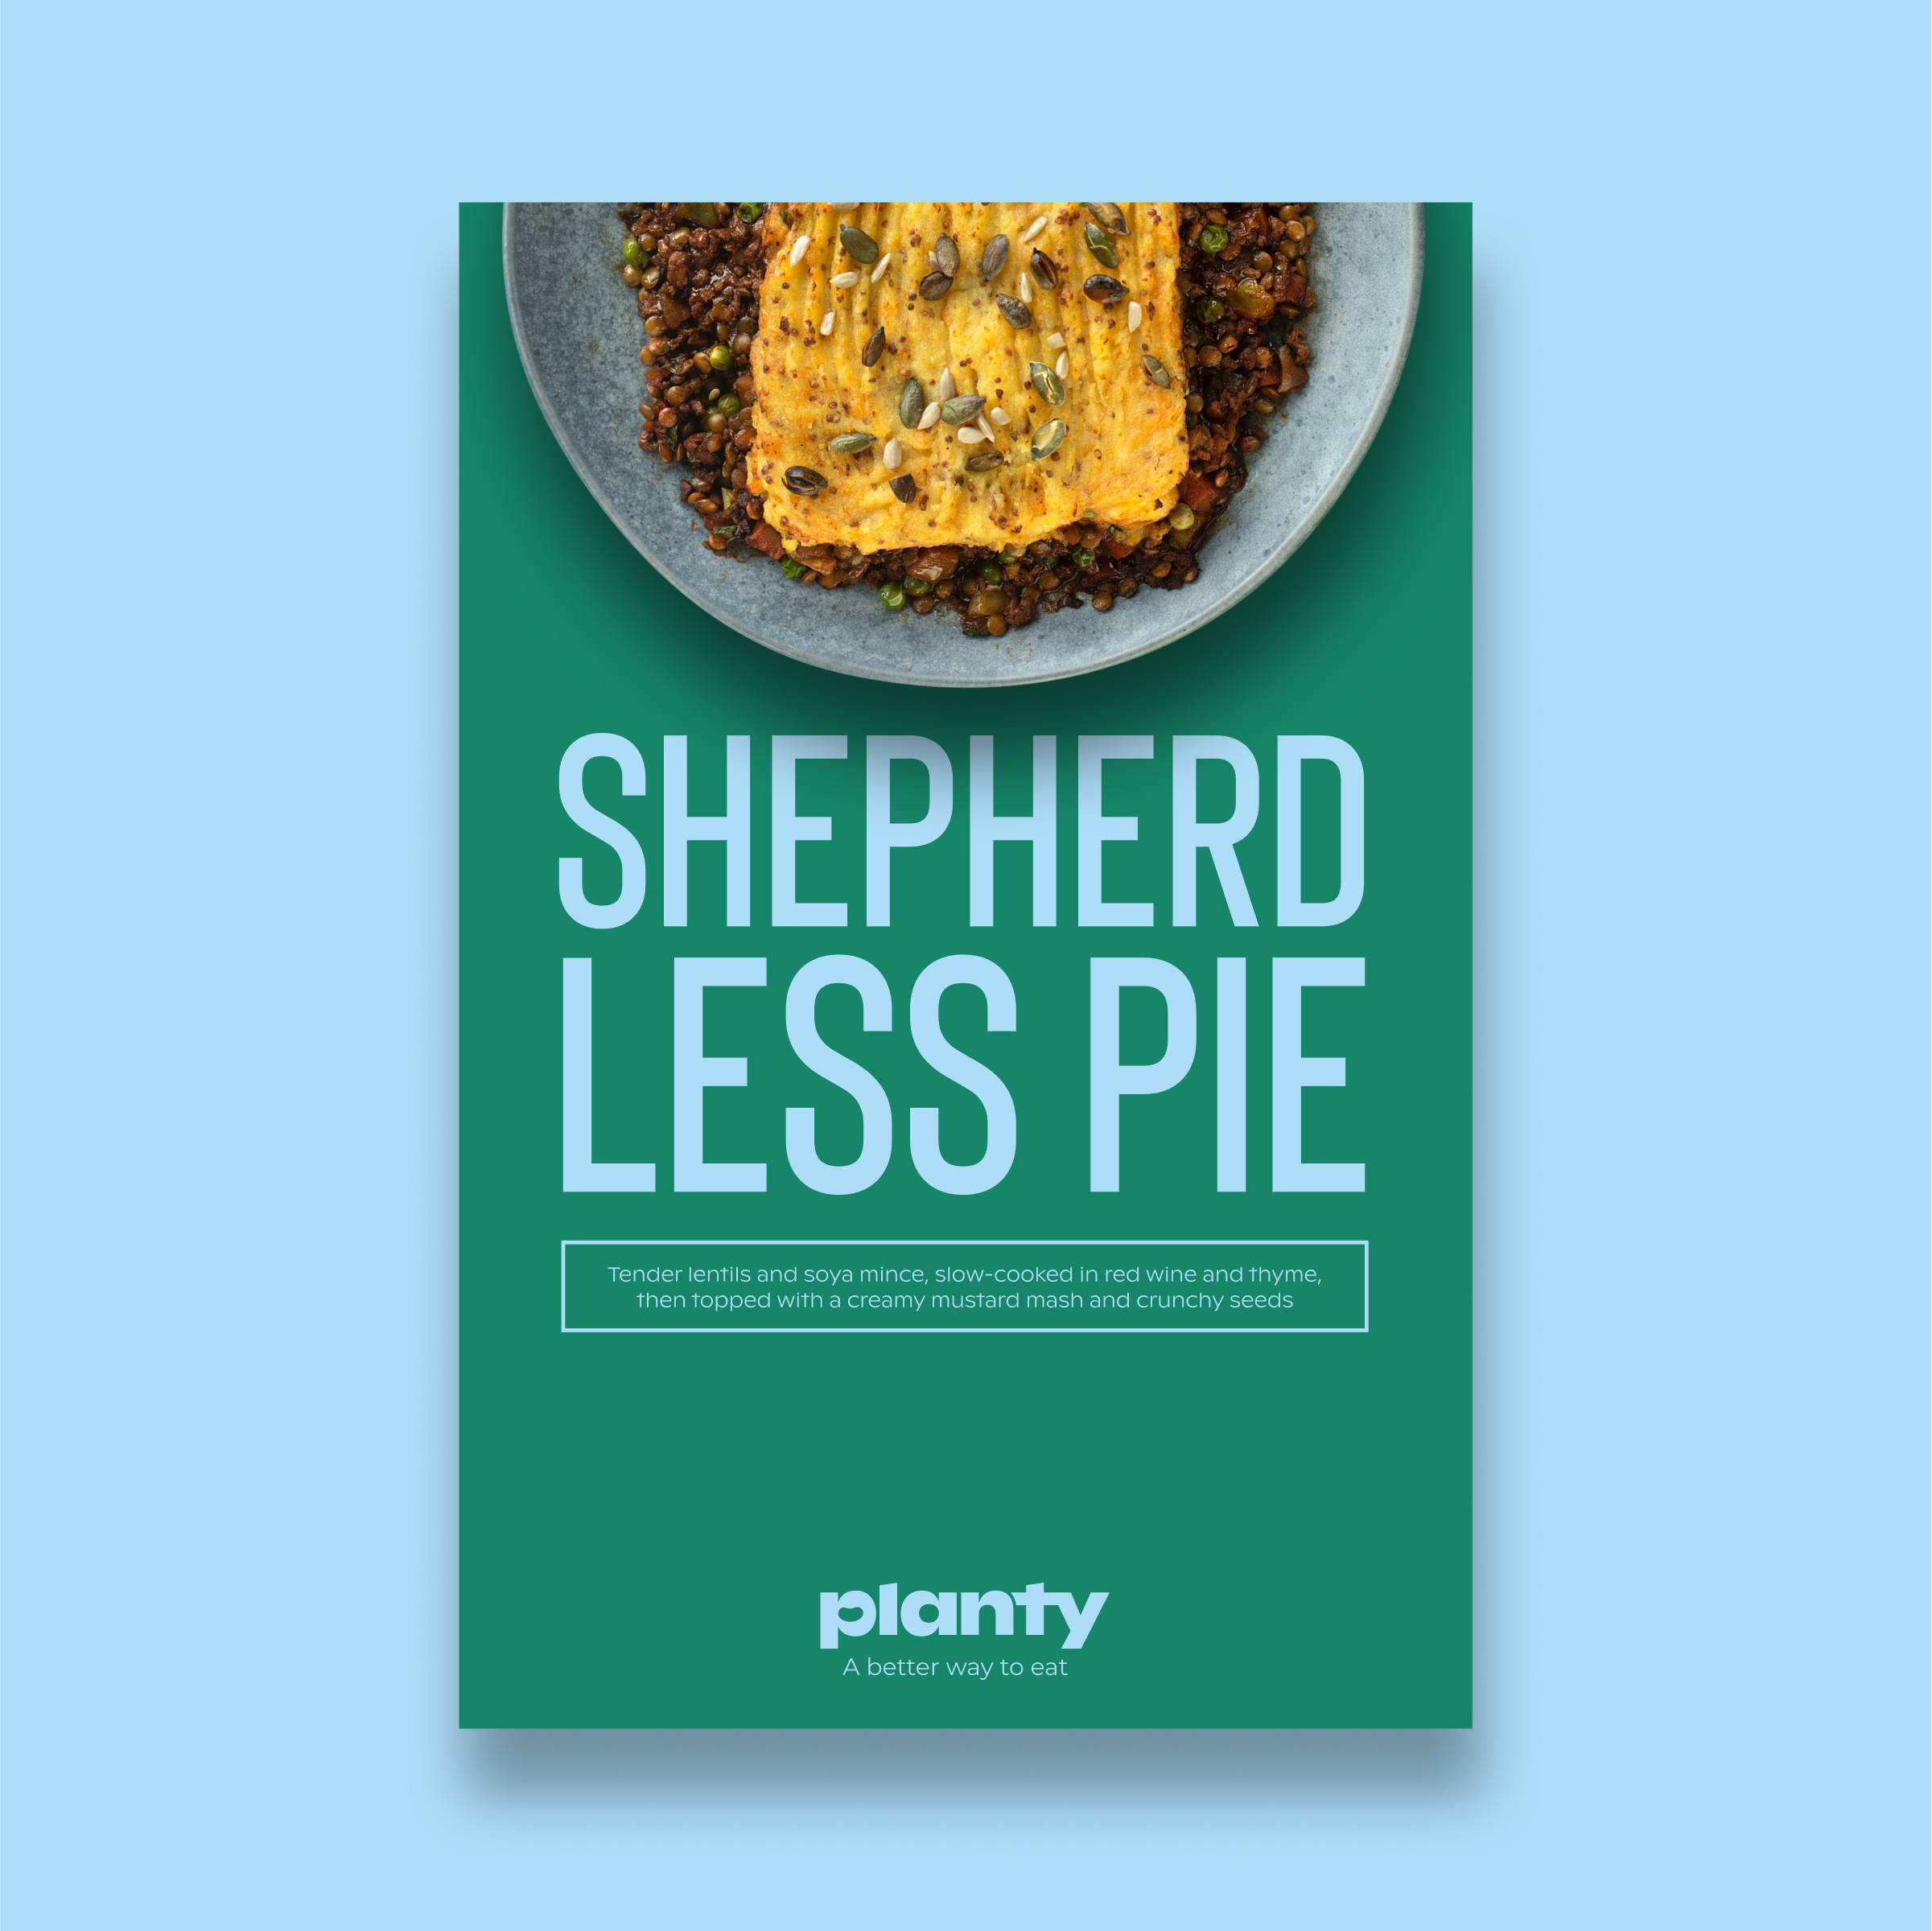 Shepherd-less Pie image 2